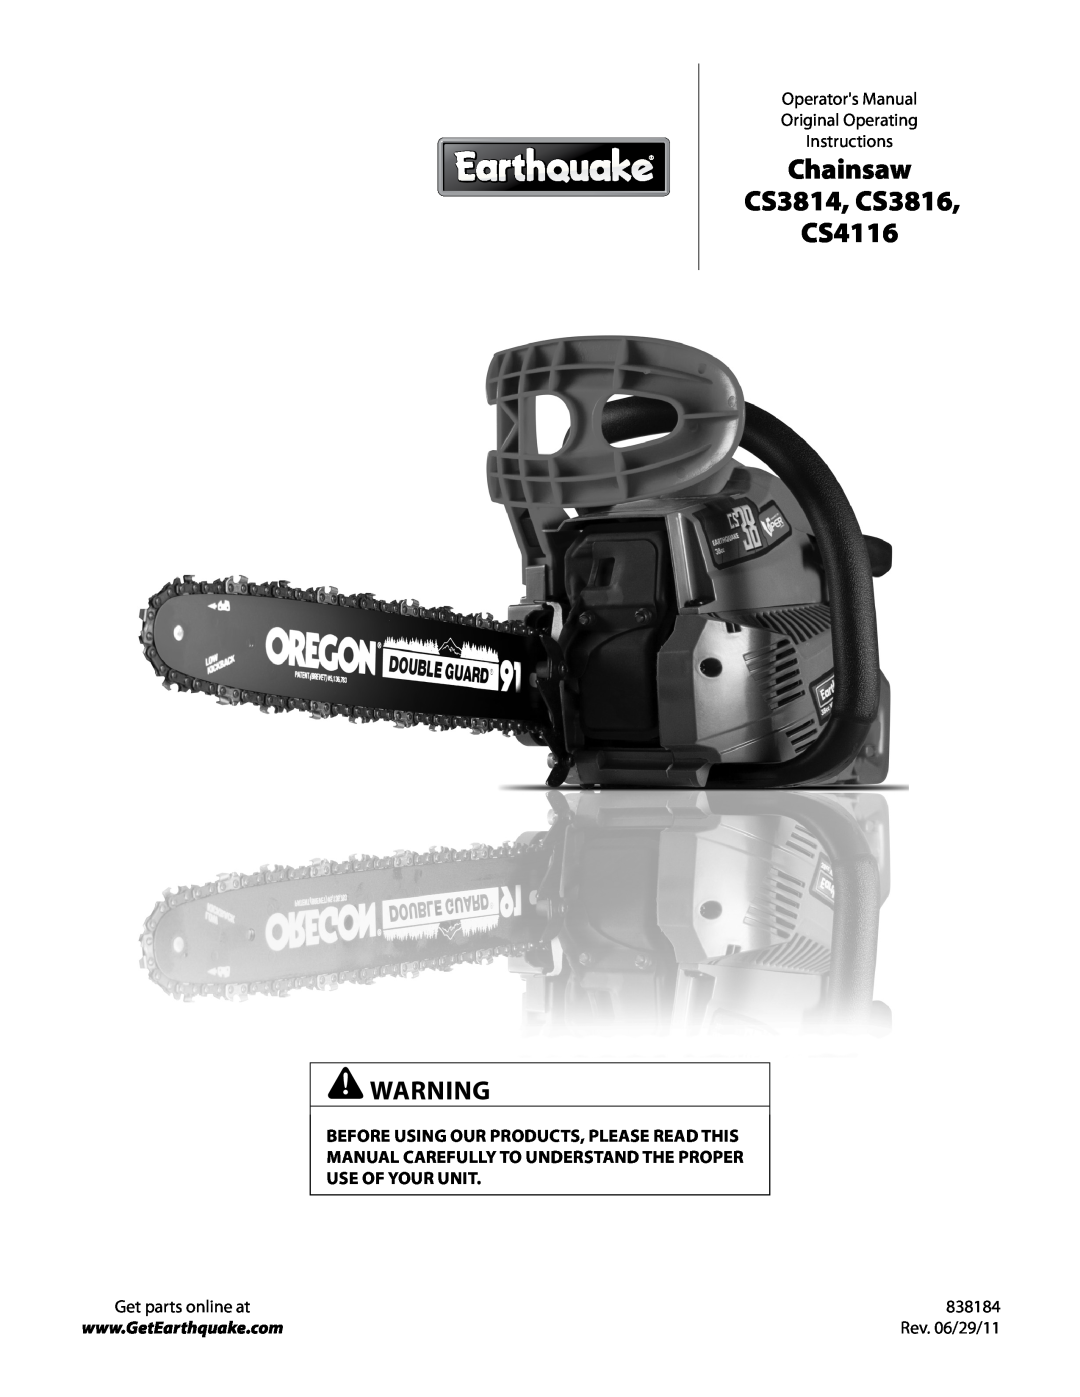 EarthQuake manual Chainsaw CS3814, CS3816 CS4116, Operators Manual Original Operating Instructions, 838184 